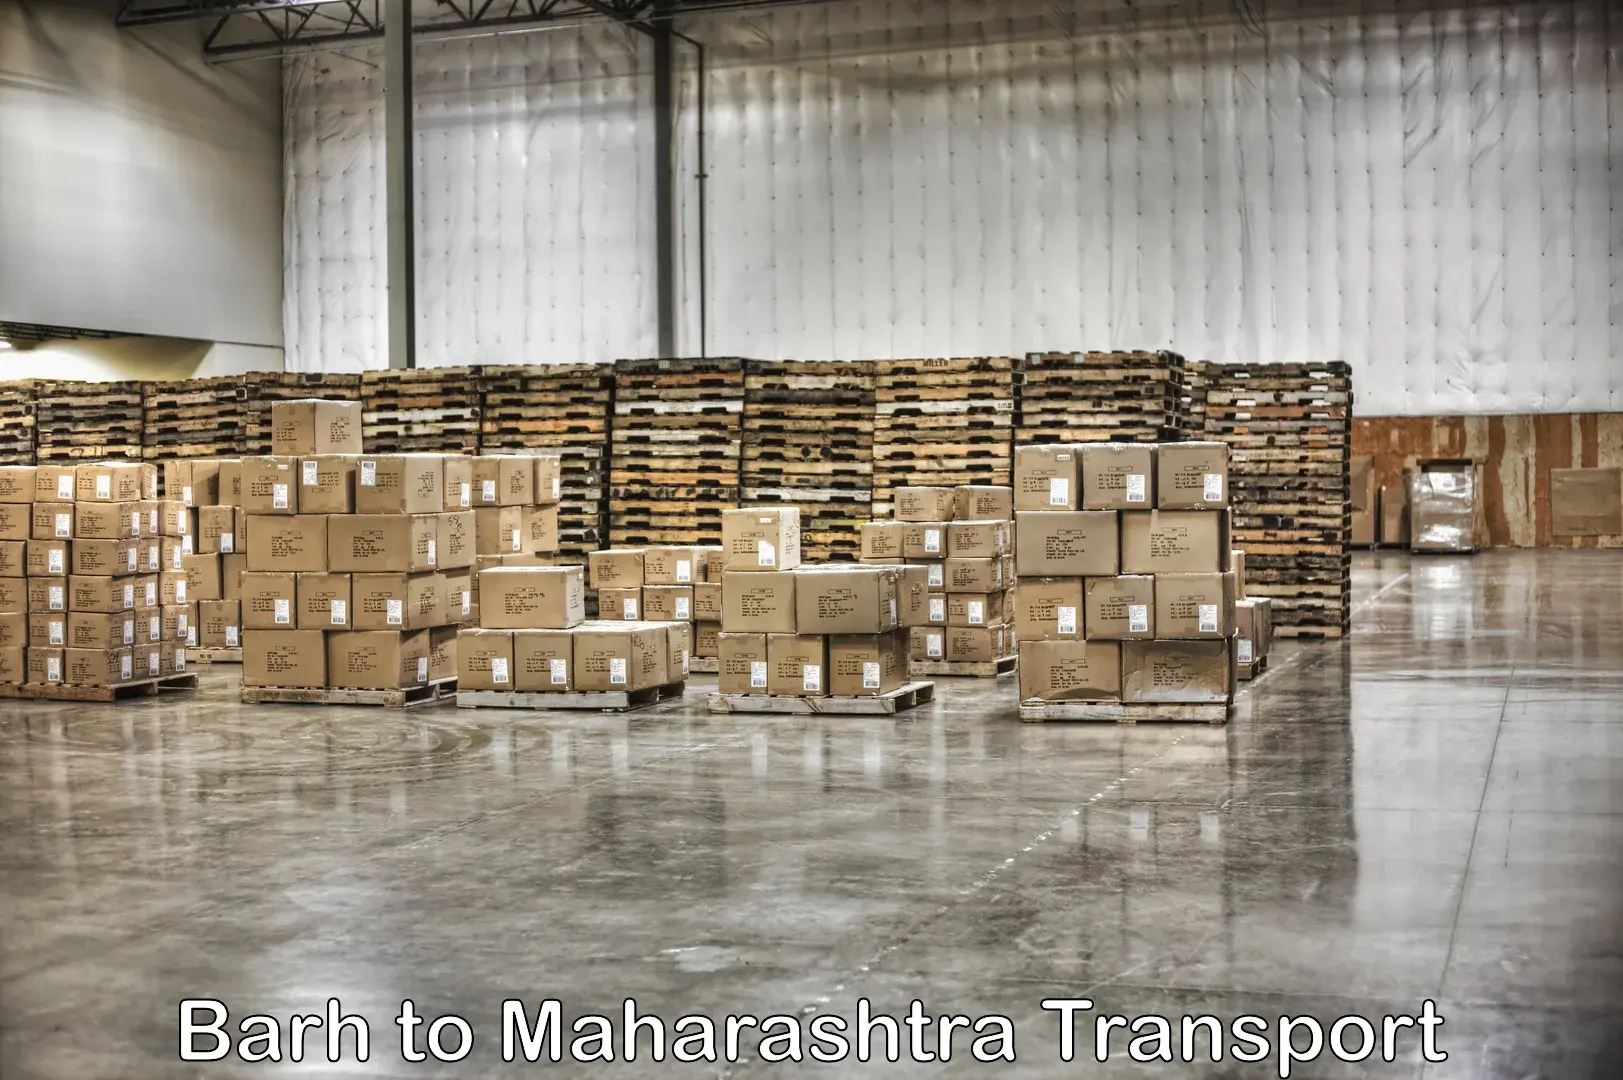 Furniture transport service in Barh to Dusarbid